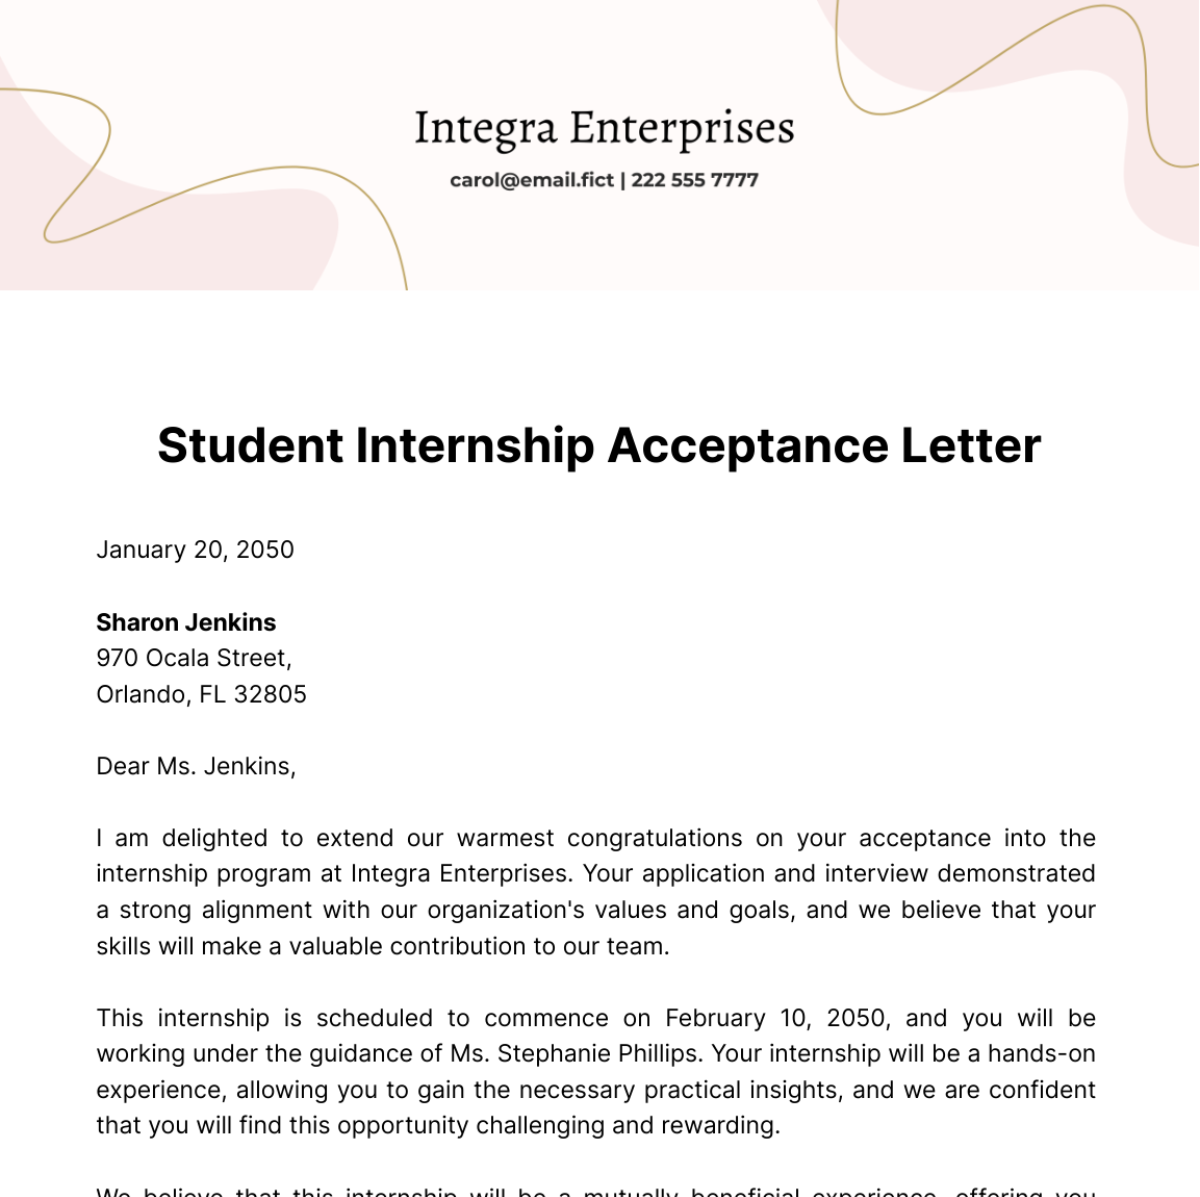 Student Internship Acceptance Letter Template